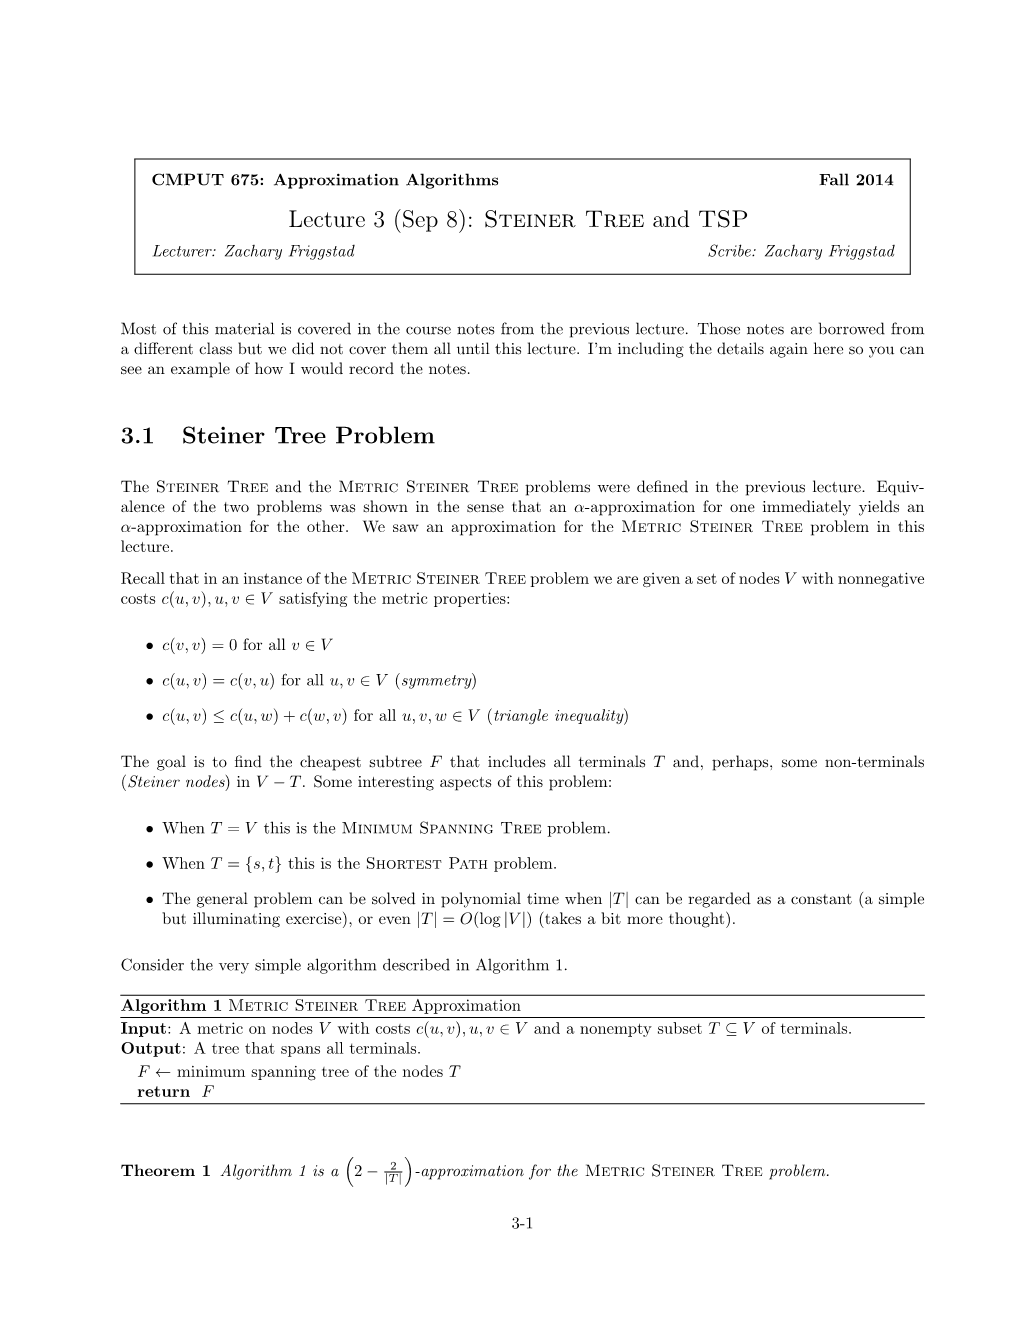 Lecture 3 (Sep 8): Steiner Tree and TSP 3.1 Steiner Tree Problem